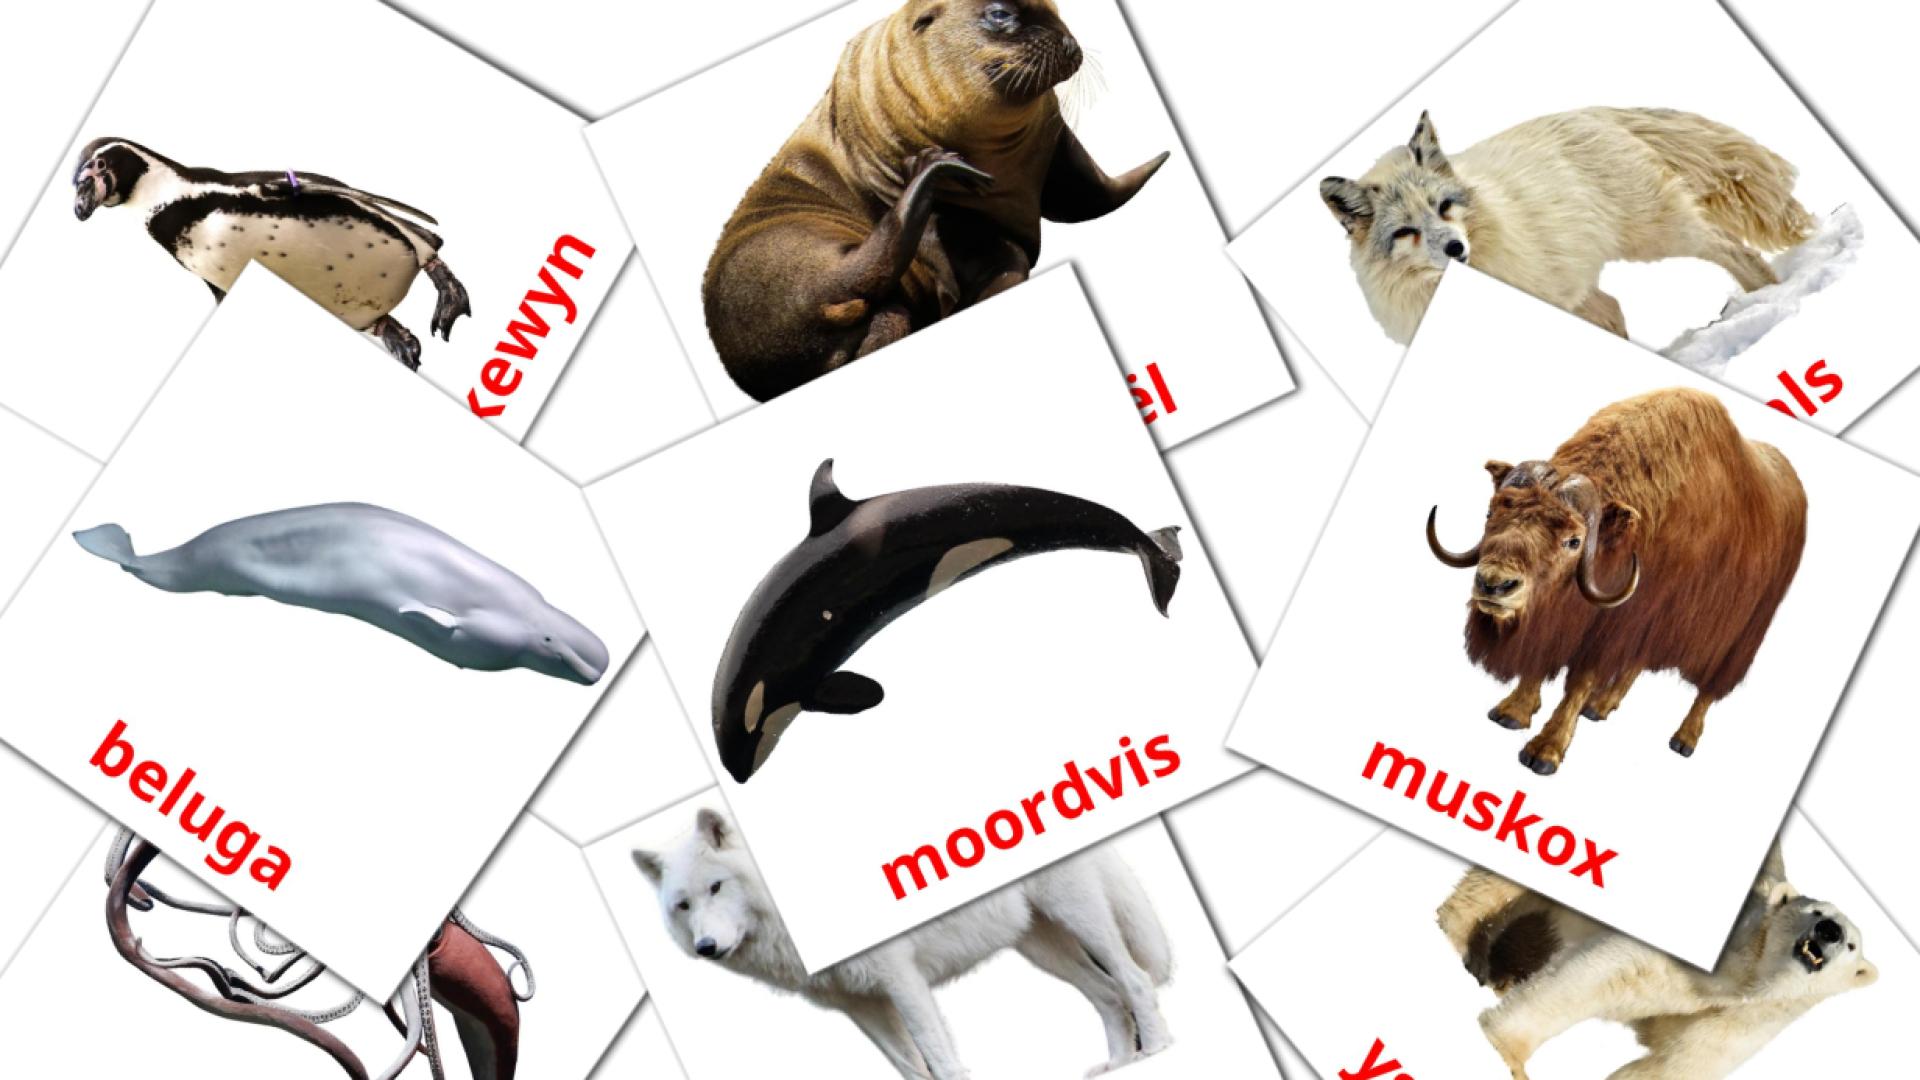 Arctic animals - afrikaans vocabulary cards